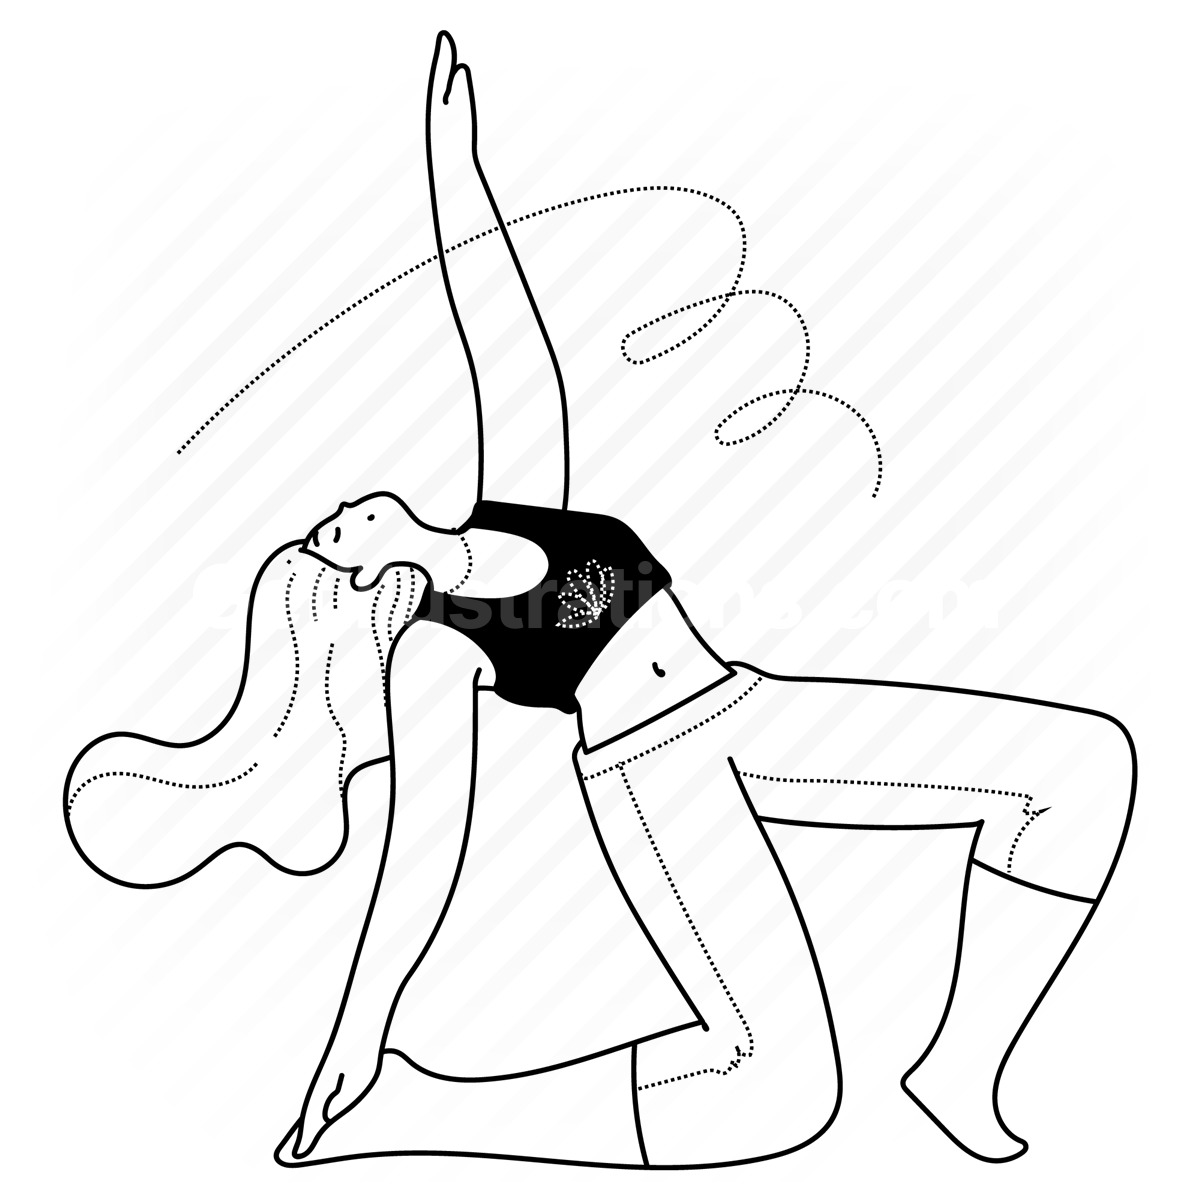 motion, movement, stretch, yoga, pose, woman, people